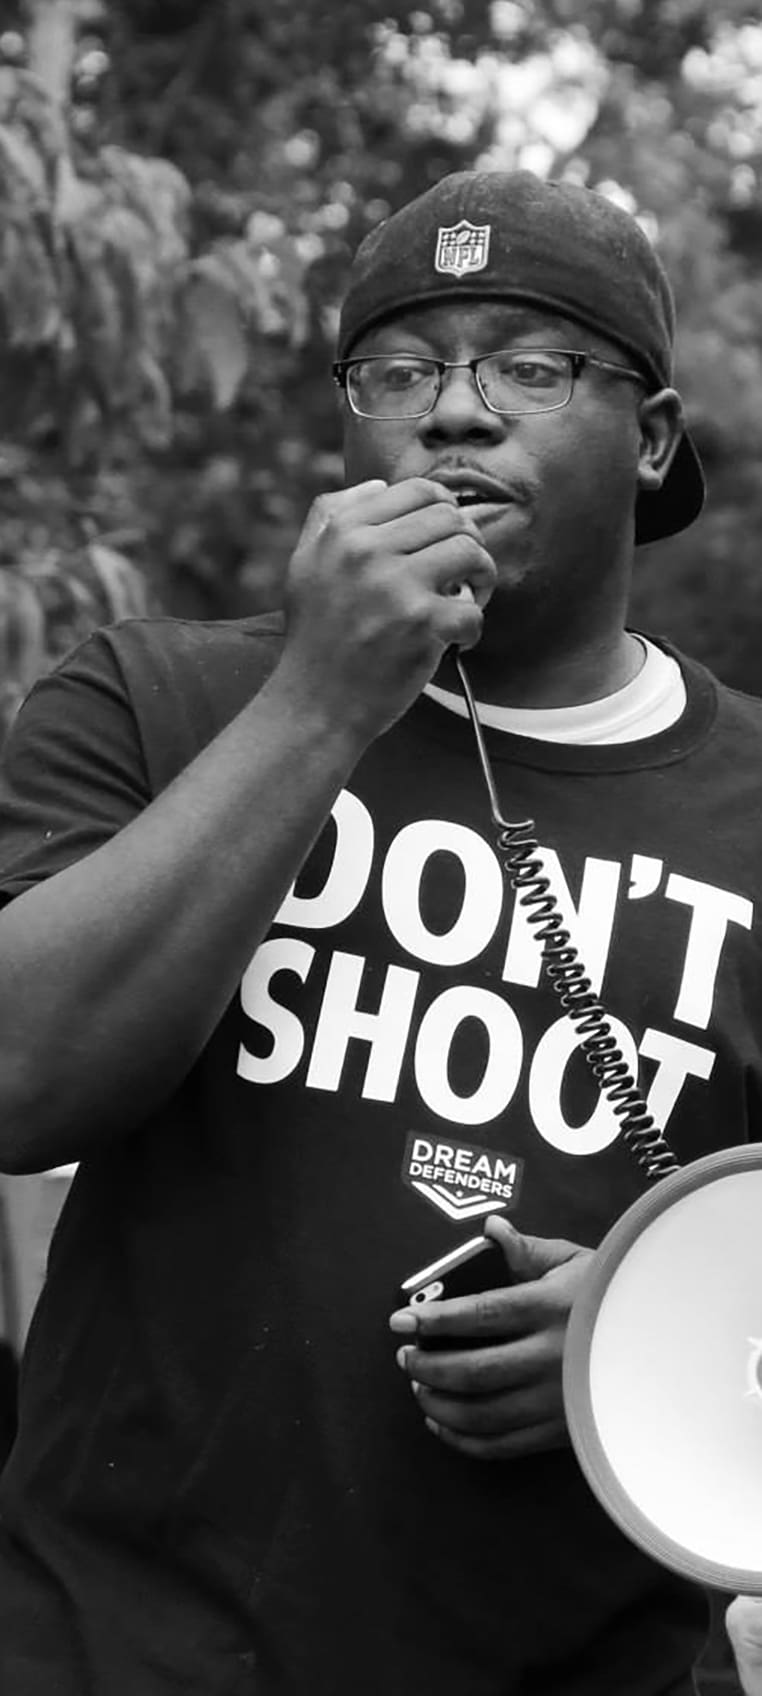 U-M graduate student Austin McCoy speaking at a protest in Ypsilanti, Michigan.